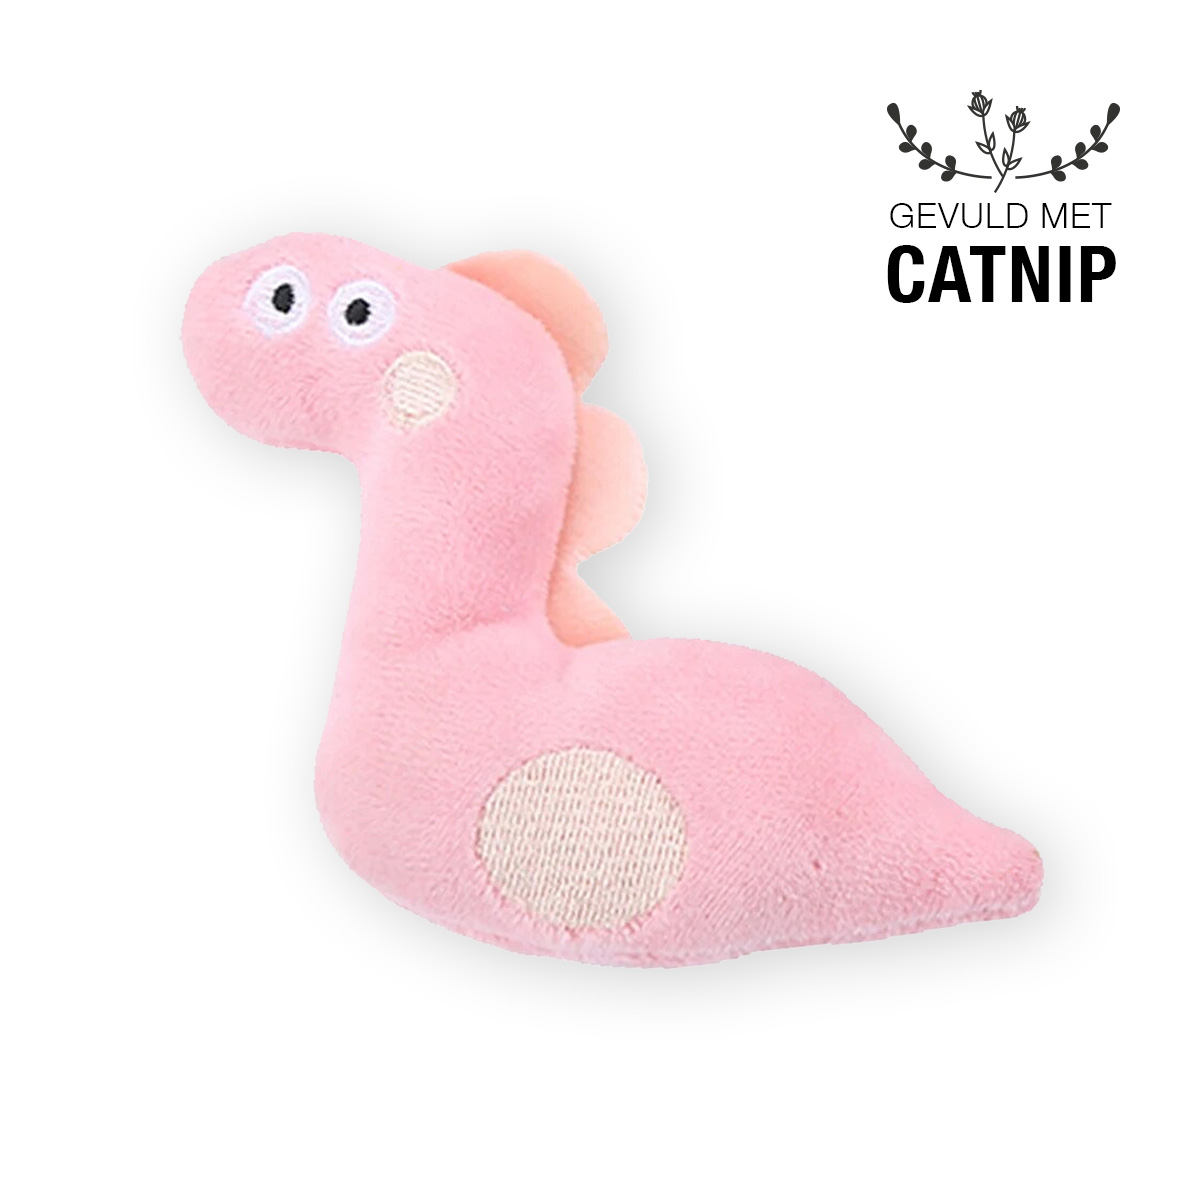 catnip-roze-dinosaurus-knuffel-kattenkruid-speelgoed